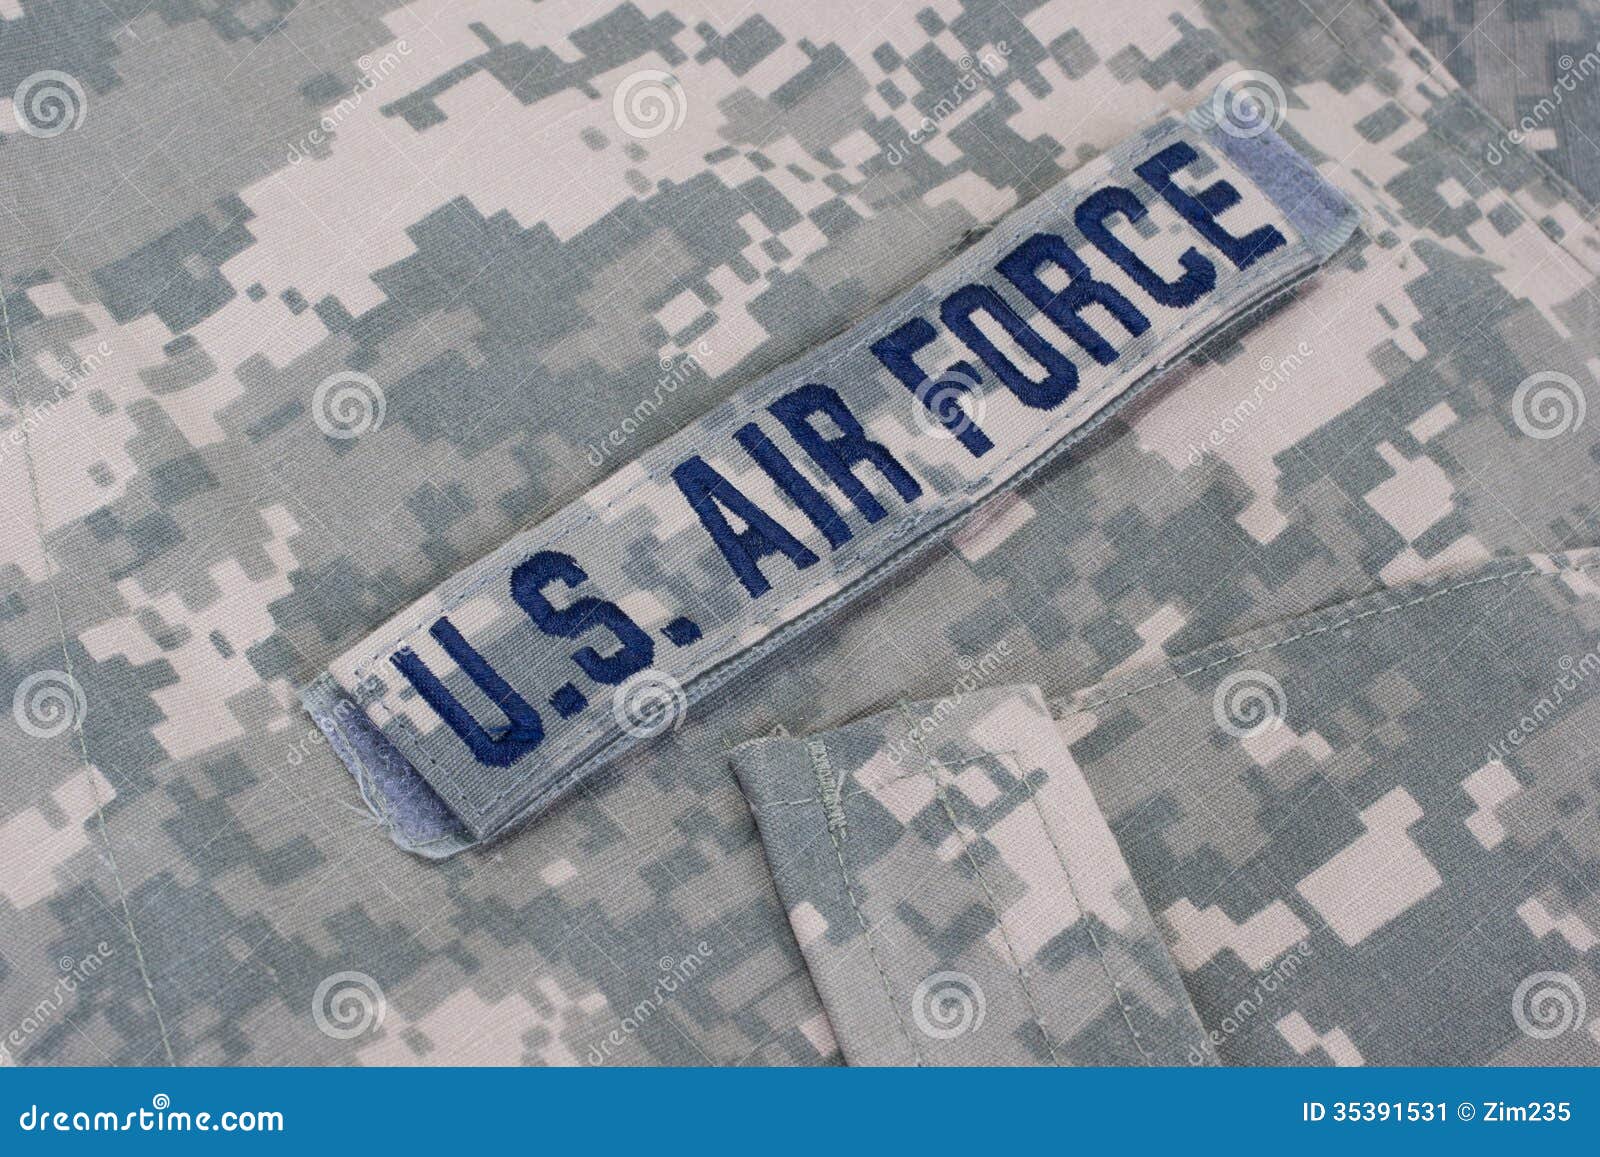 us air force uniform